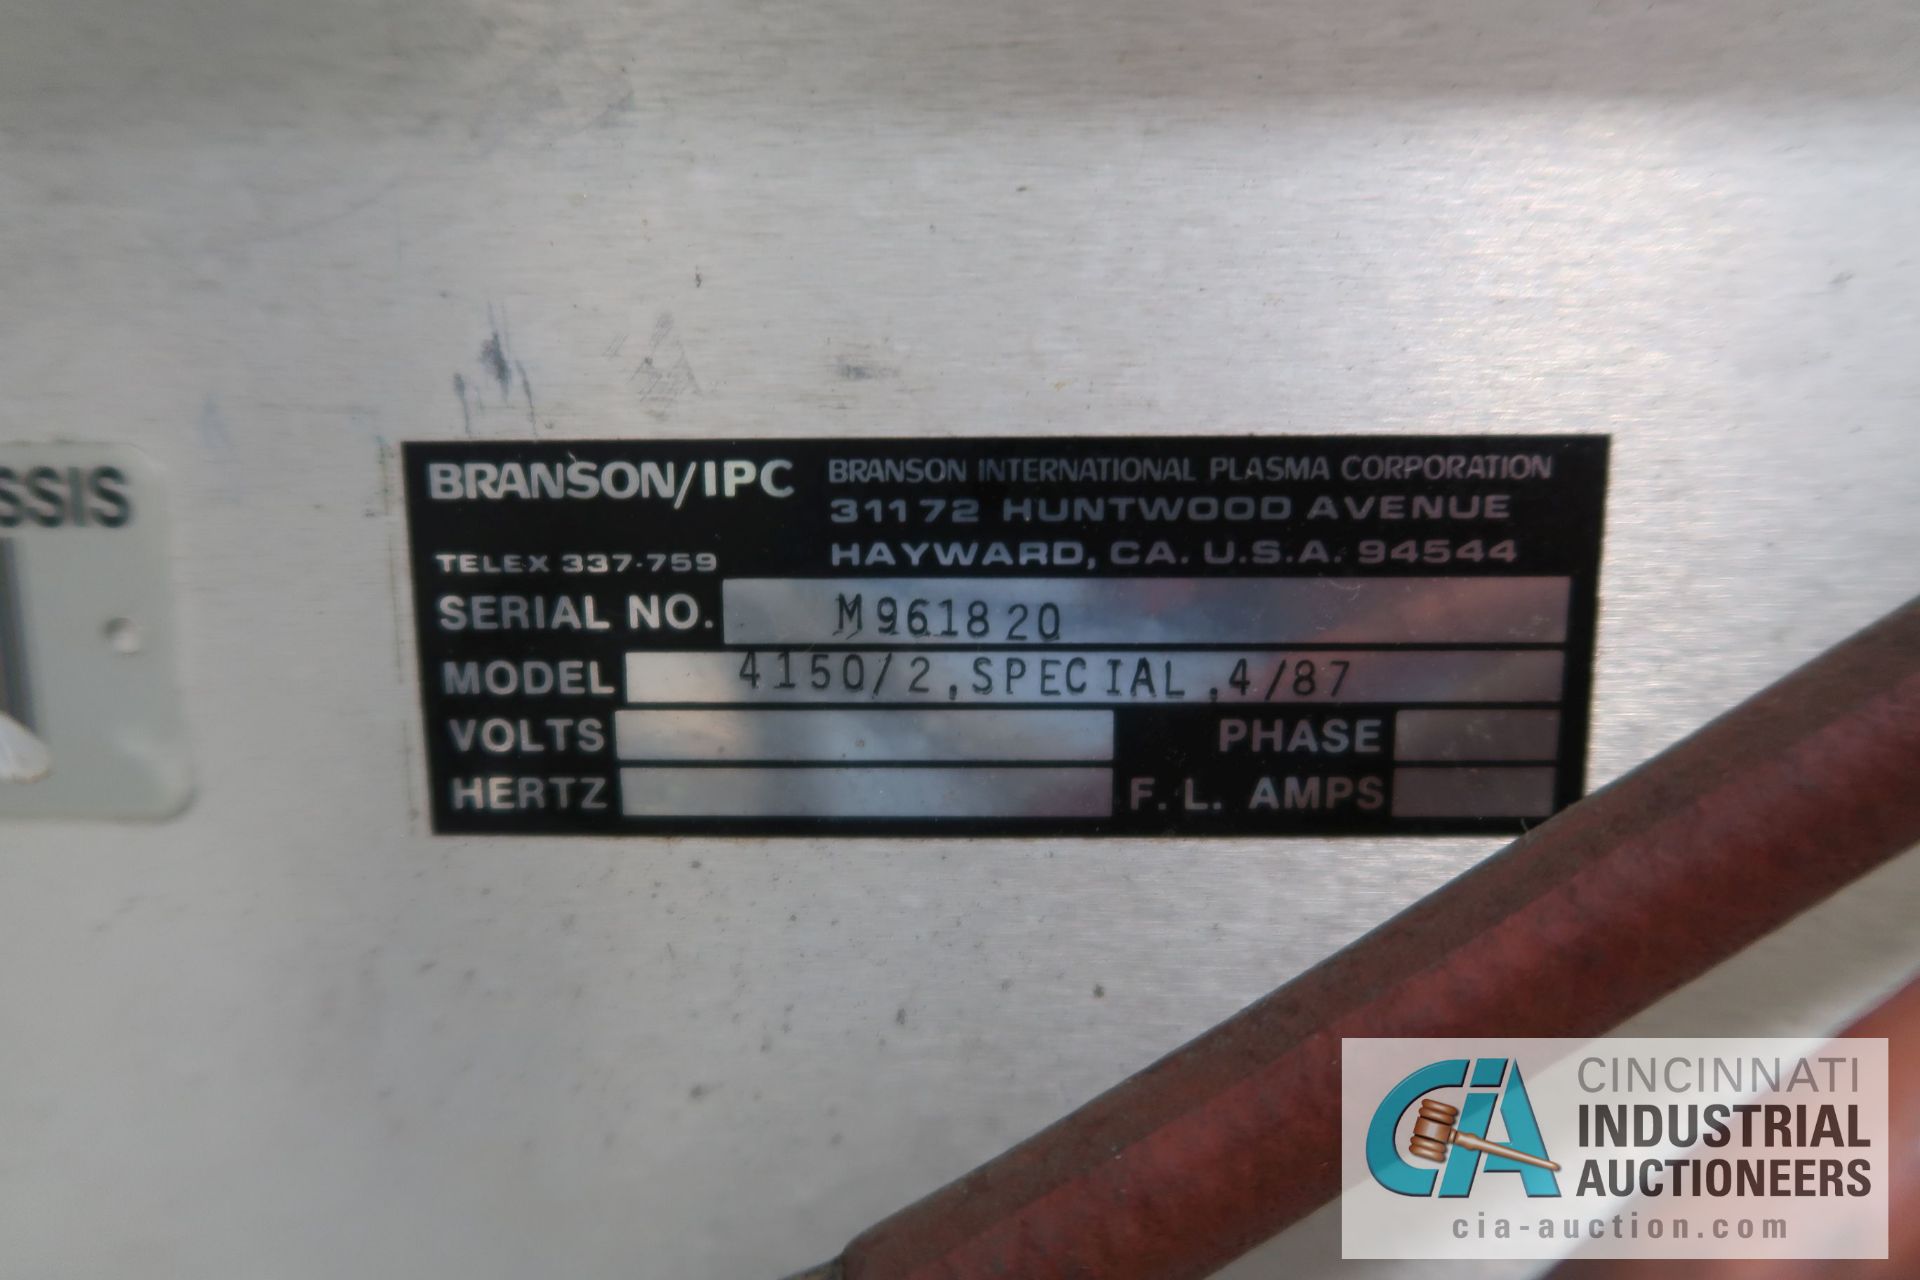 14" X 15" X 2' DEP BRANSON MODEL 415012 PLASTIC PLASMA ADHESION SURFACE TREATER; S/N M961820, WITH - Image 6 of 6